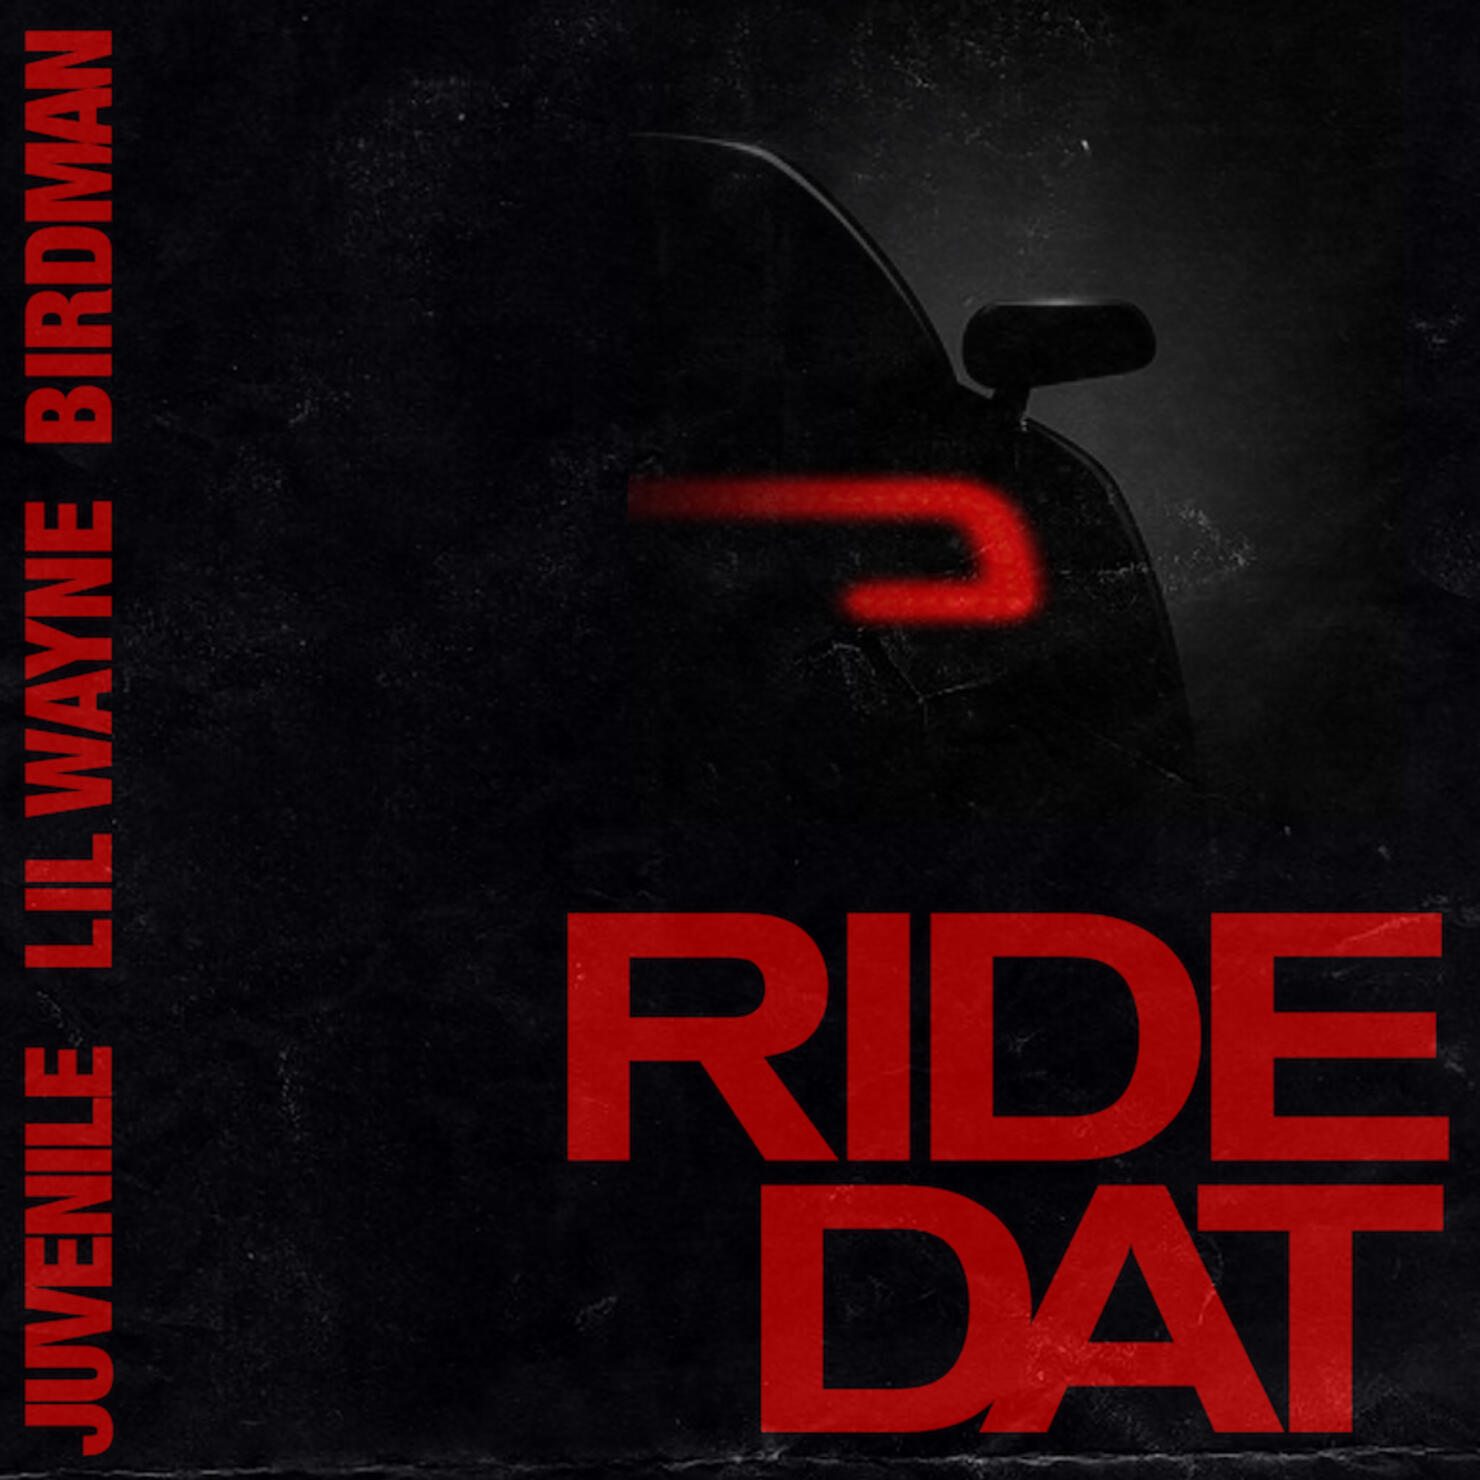 Juvenile featuring Birdman & Lil Wayne - "Ride Dat"